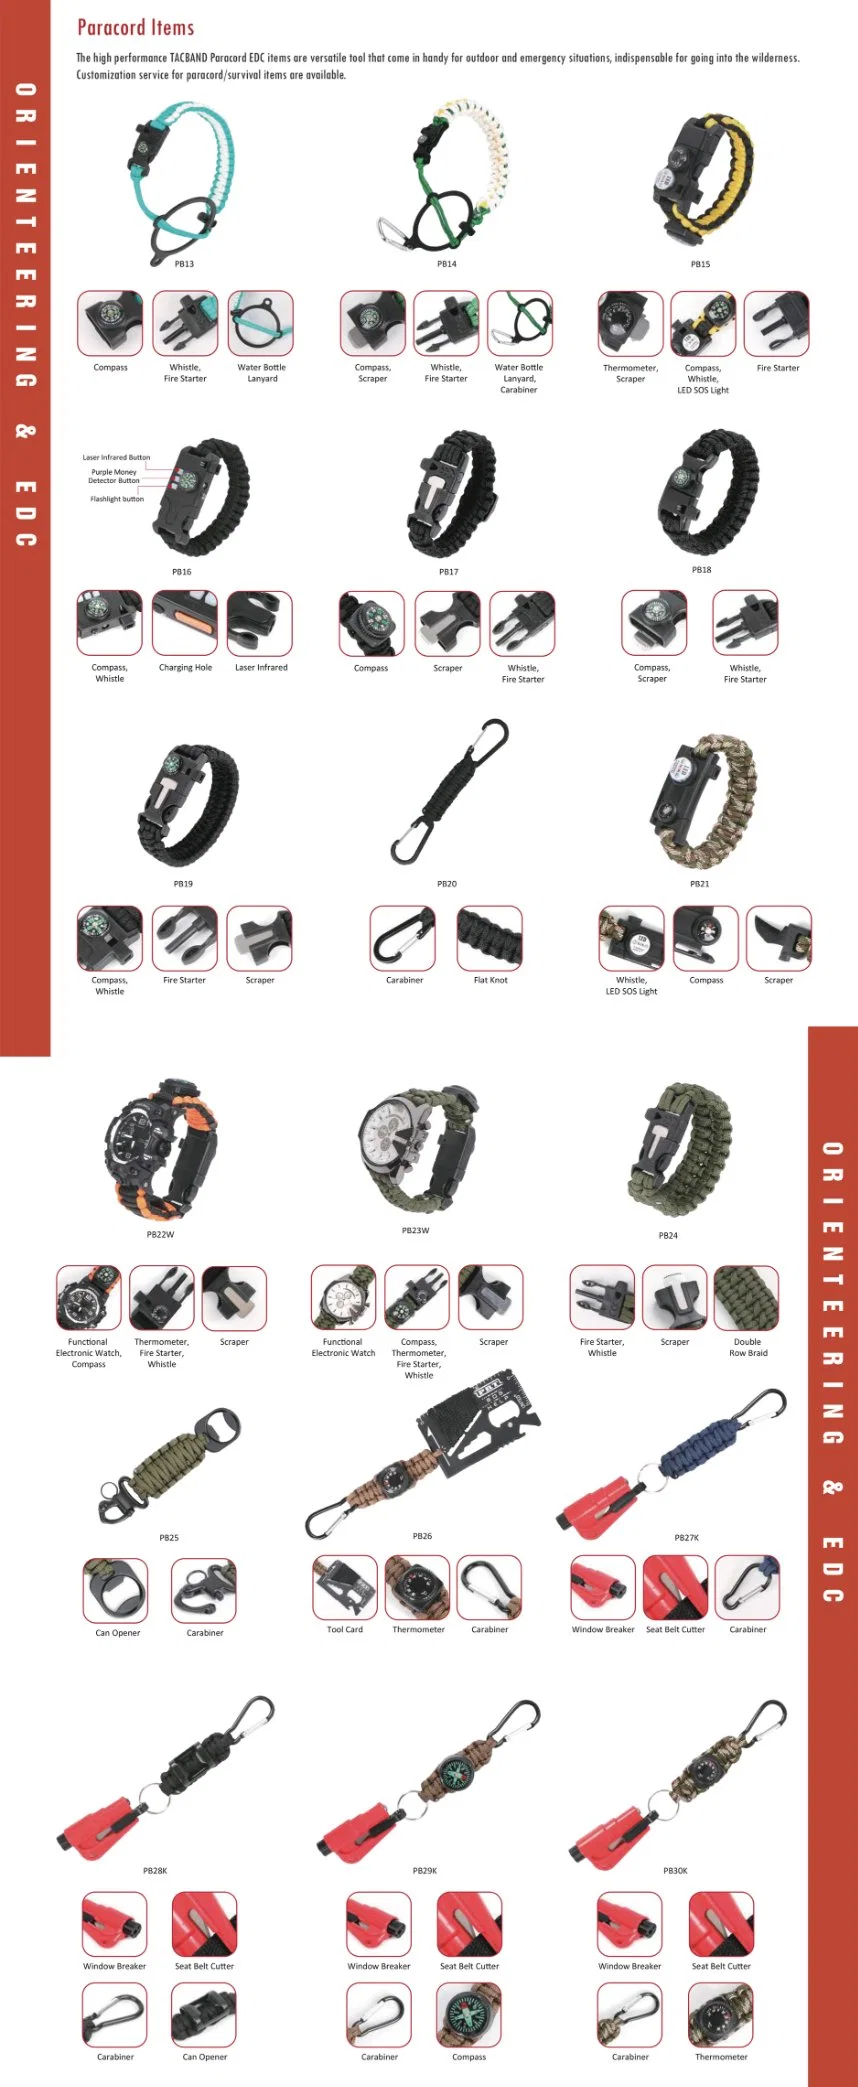 Tacband Multi Key Chain Window Breaker Seat Belt Cutter Carabiner Can Opener Survival Tool